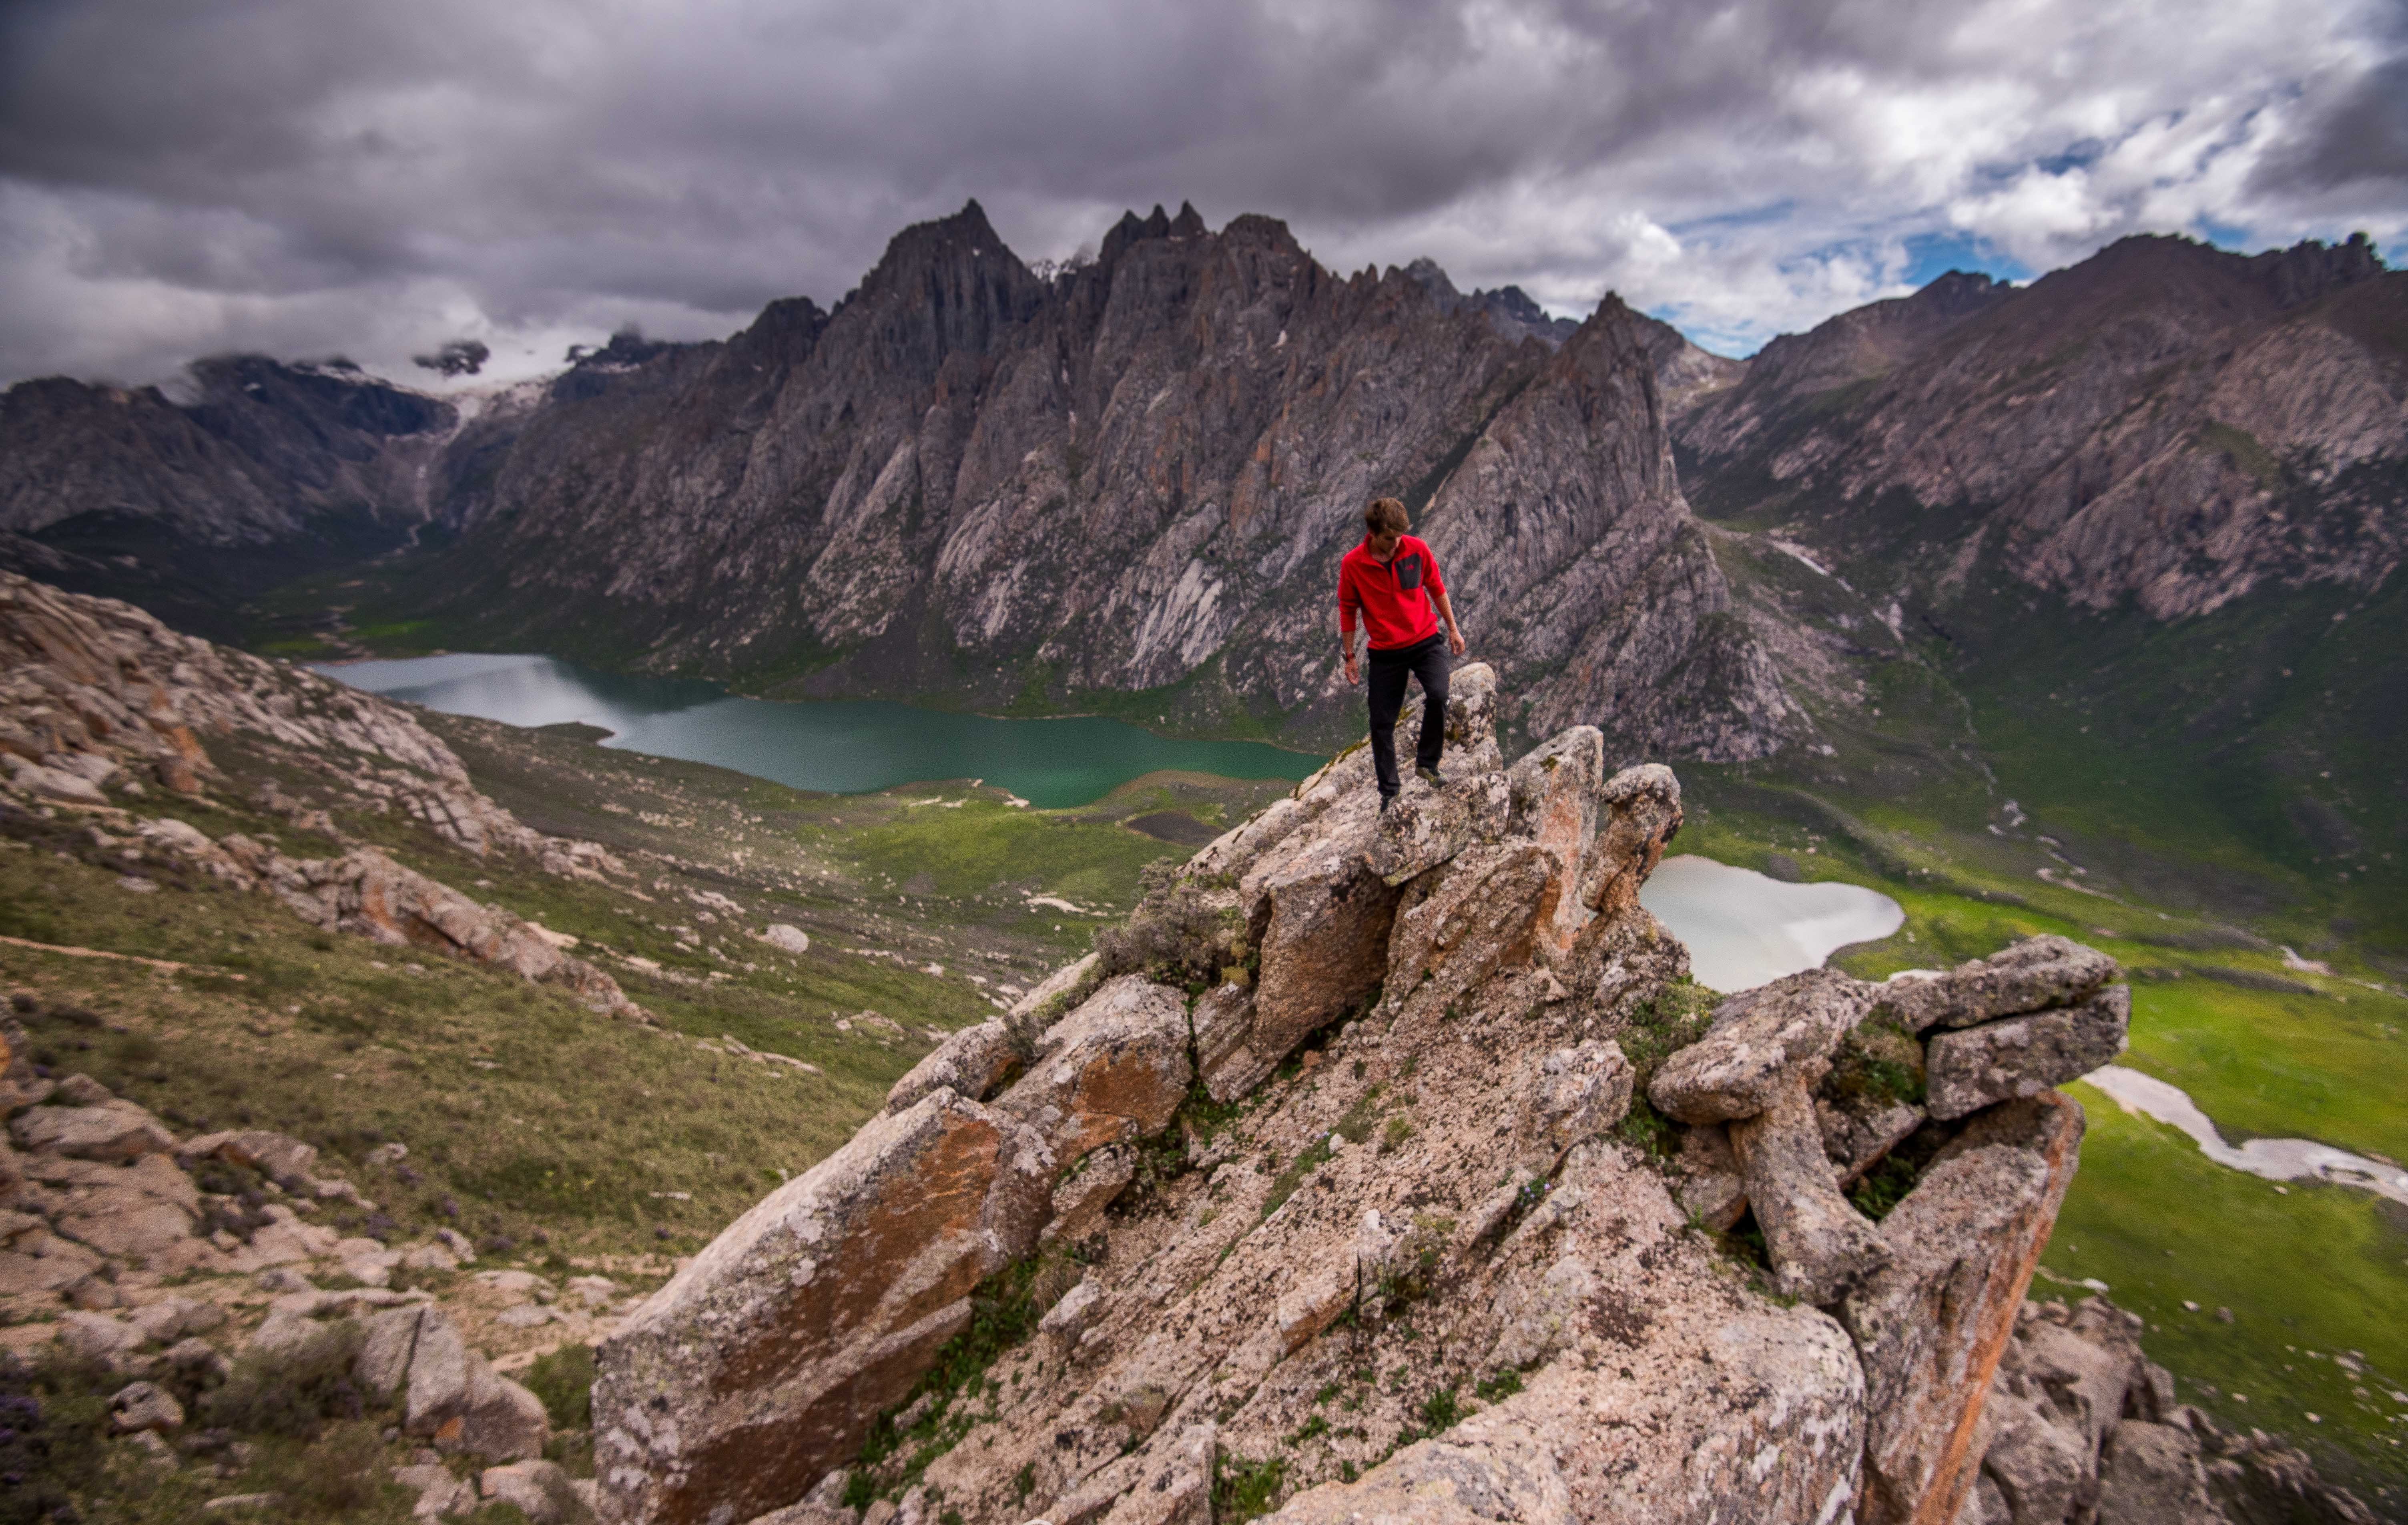 Kyle Obermann exploring the sacred peaks of Golok. Photos: Whistling Arrow